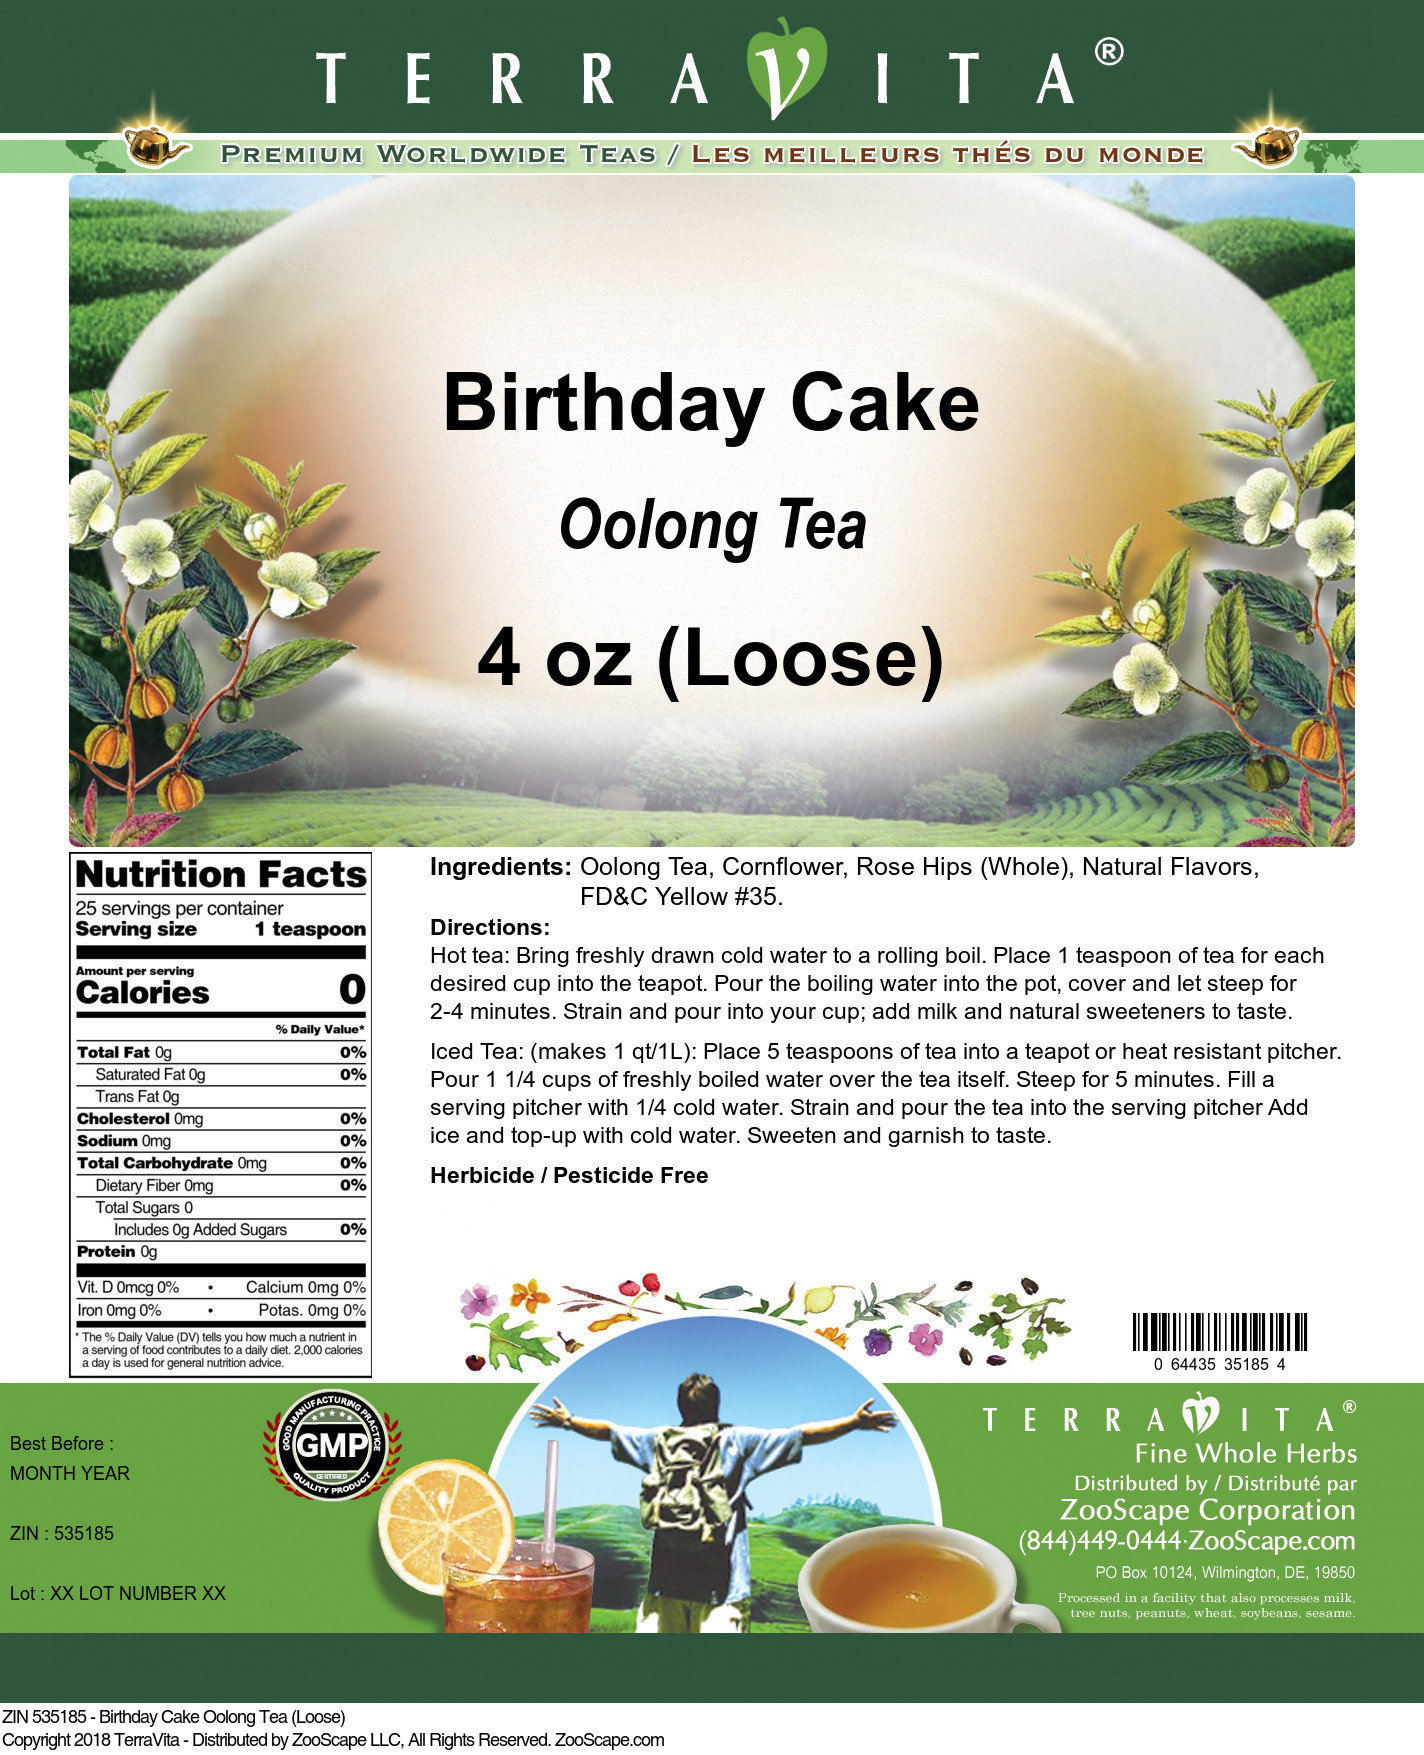 Birthday Cake Oolong Tea (Loose) - Label